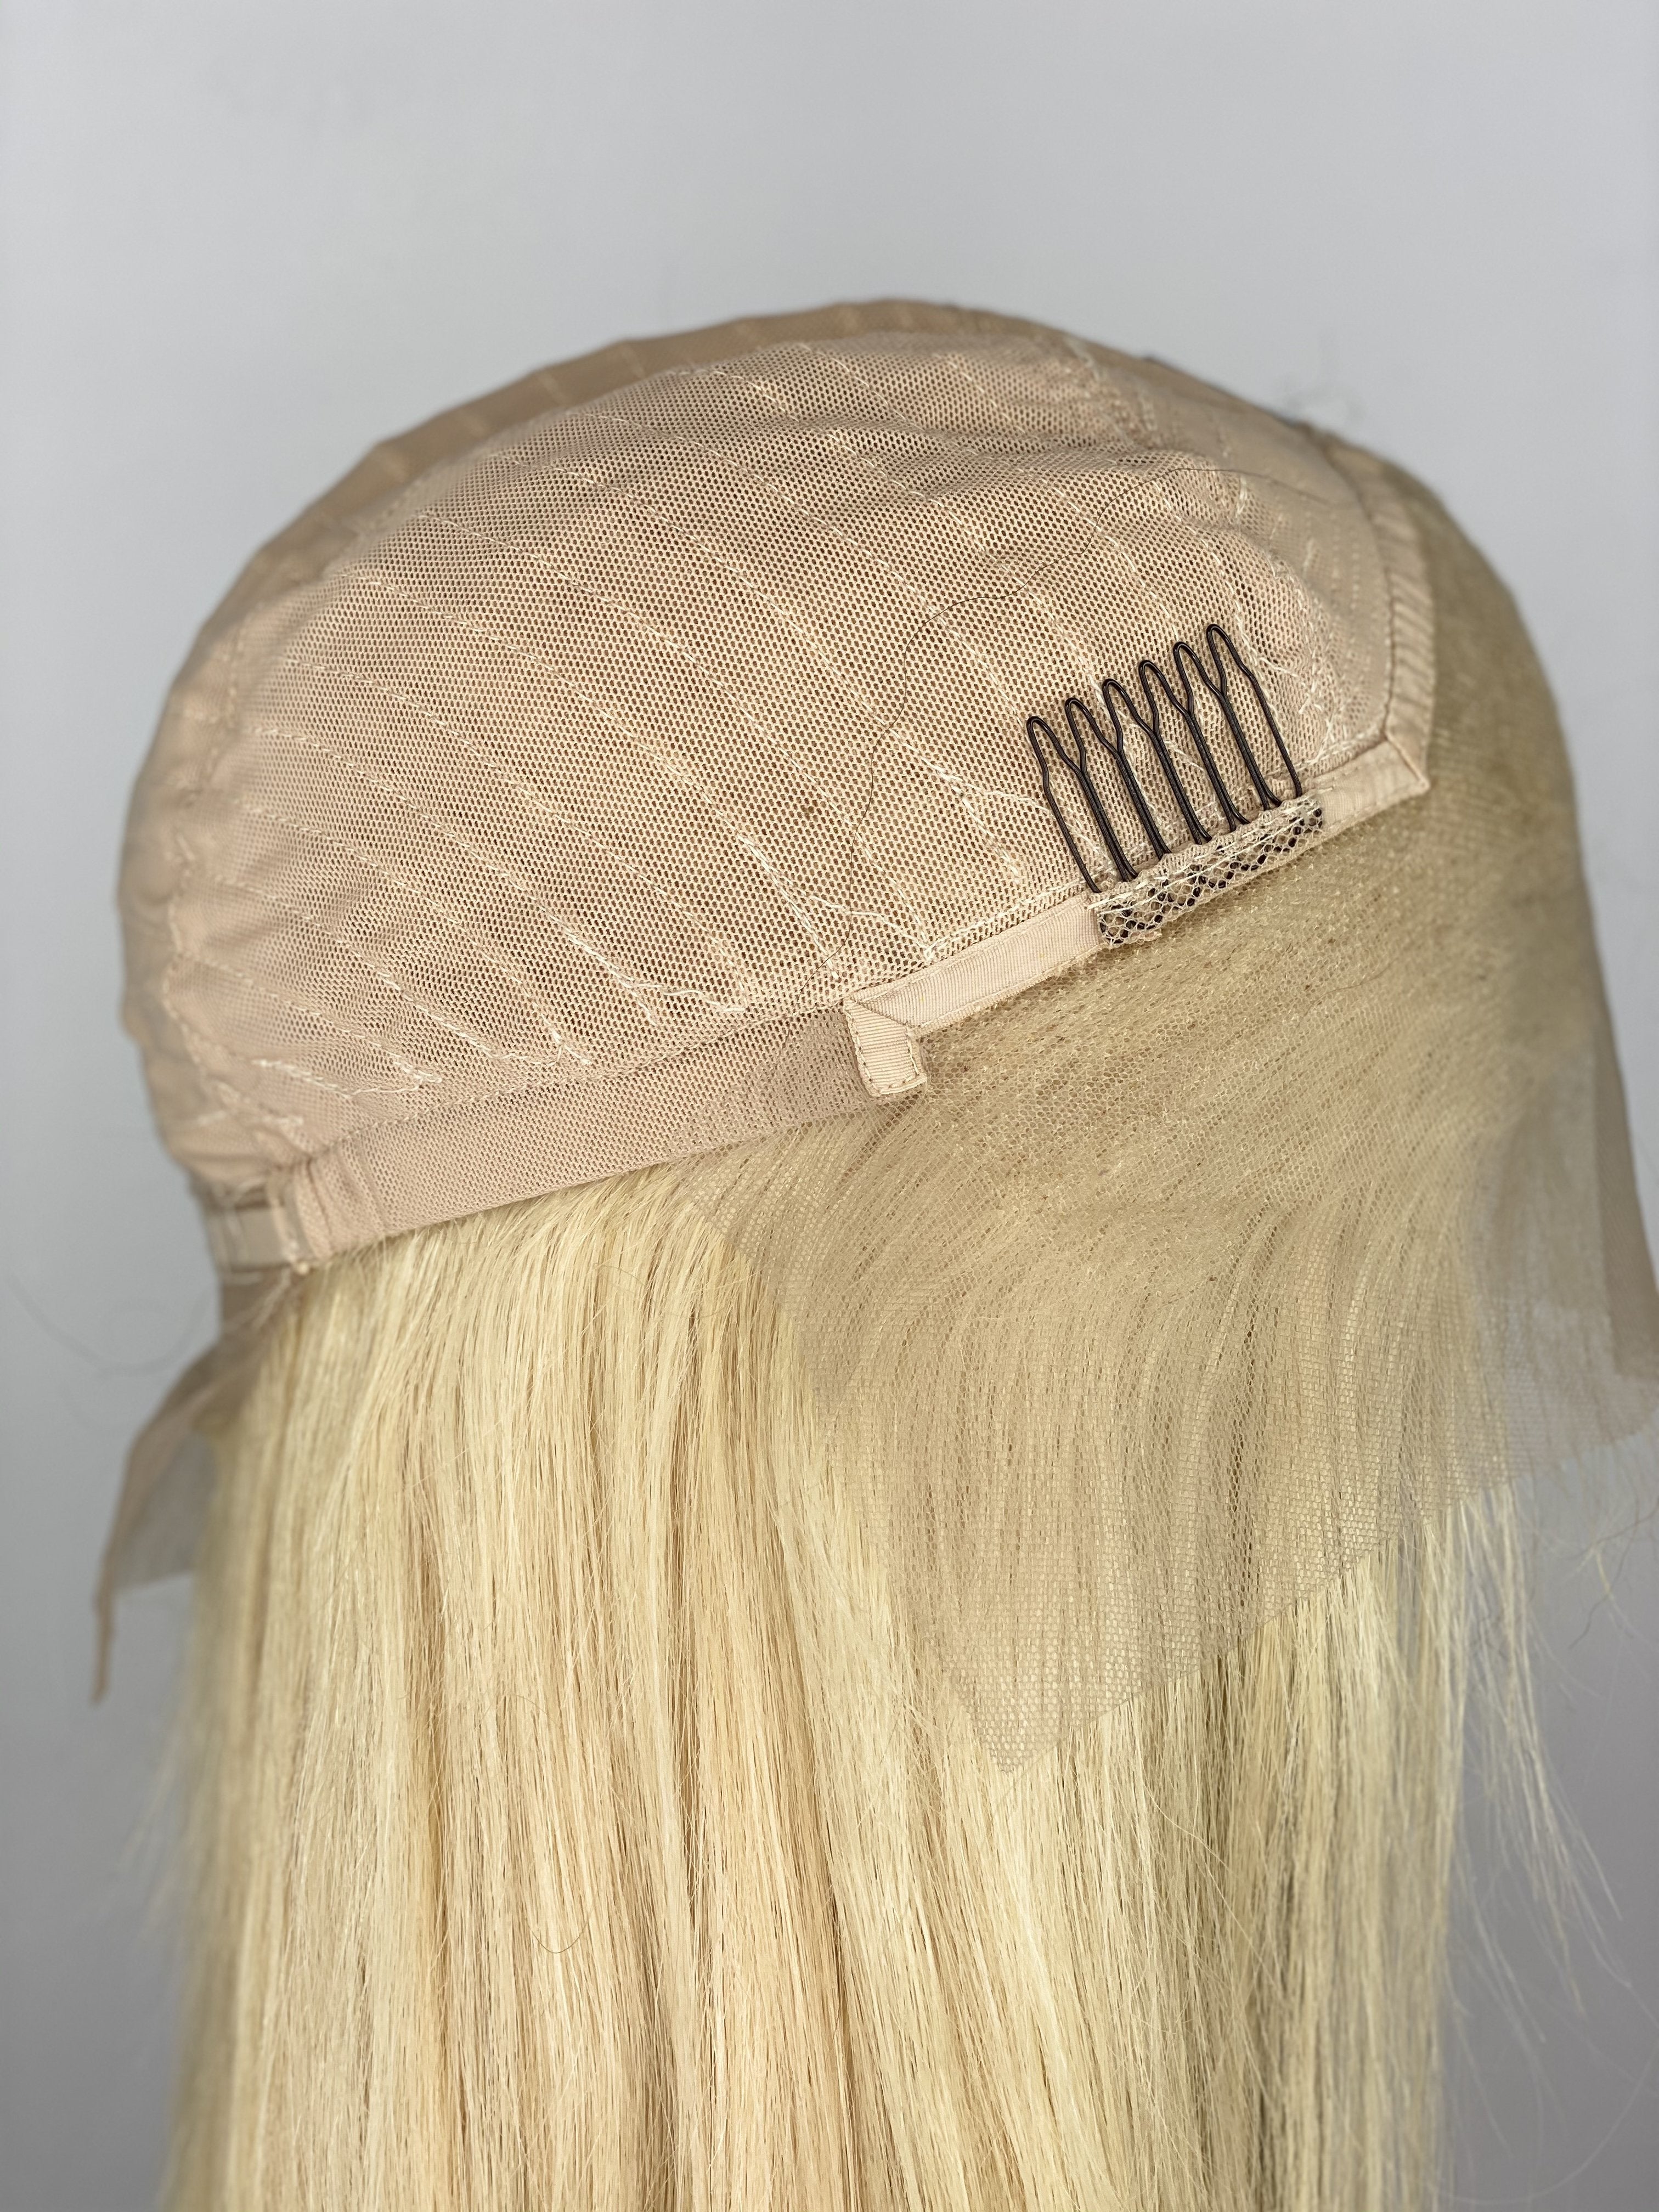 inside cap view of blonde bob wig